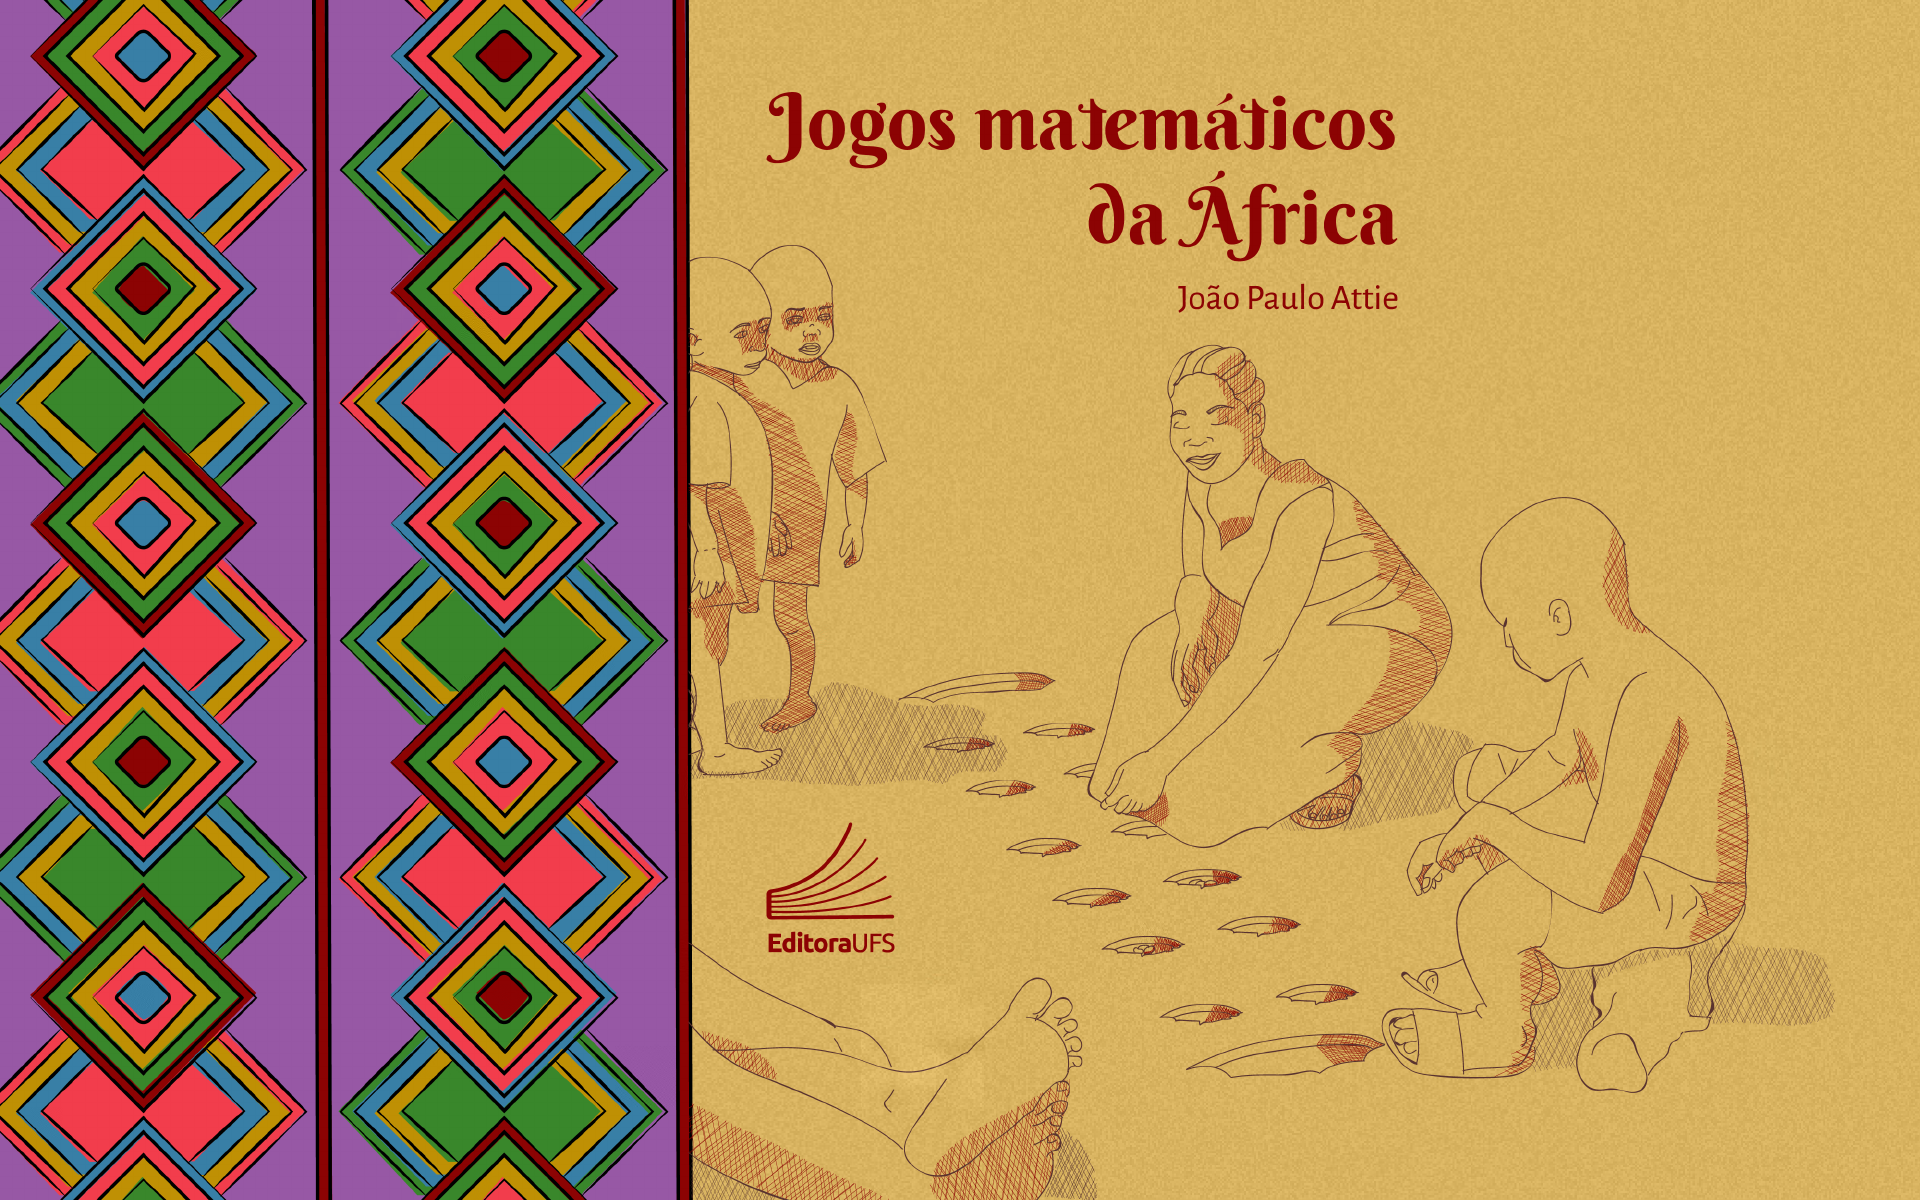 Jogos Matemáticos do Continente Africano: Tsoro Yematatu